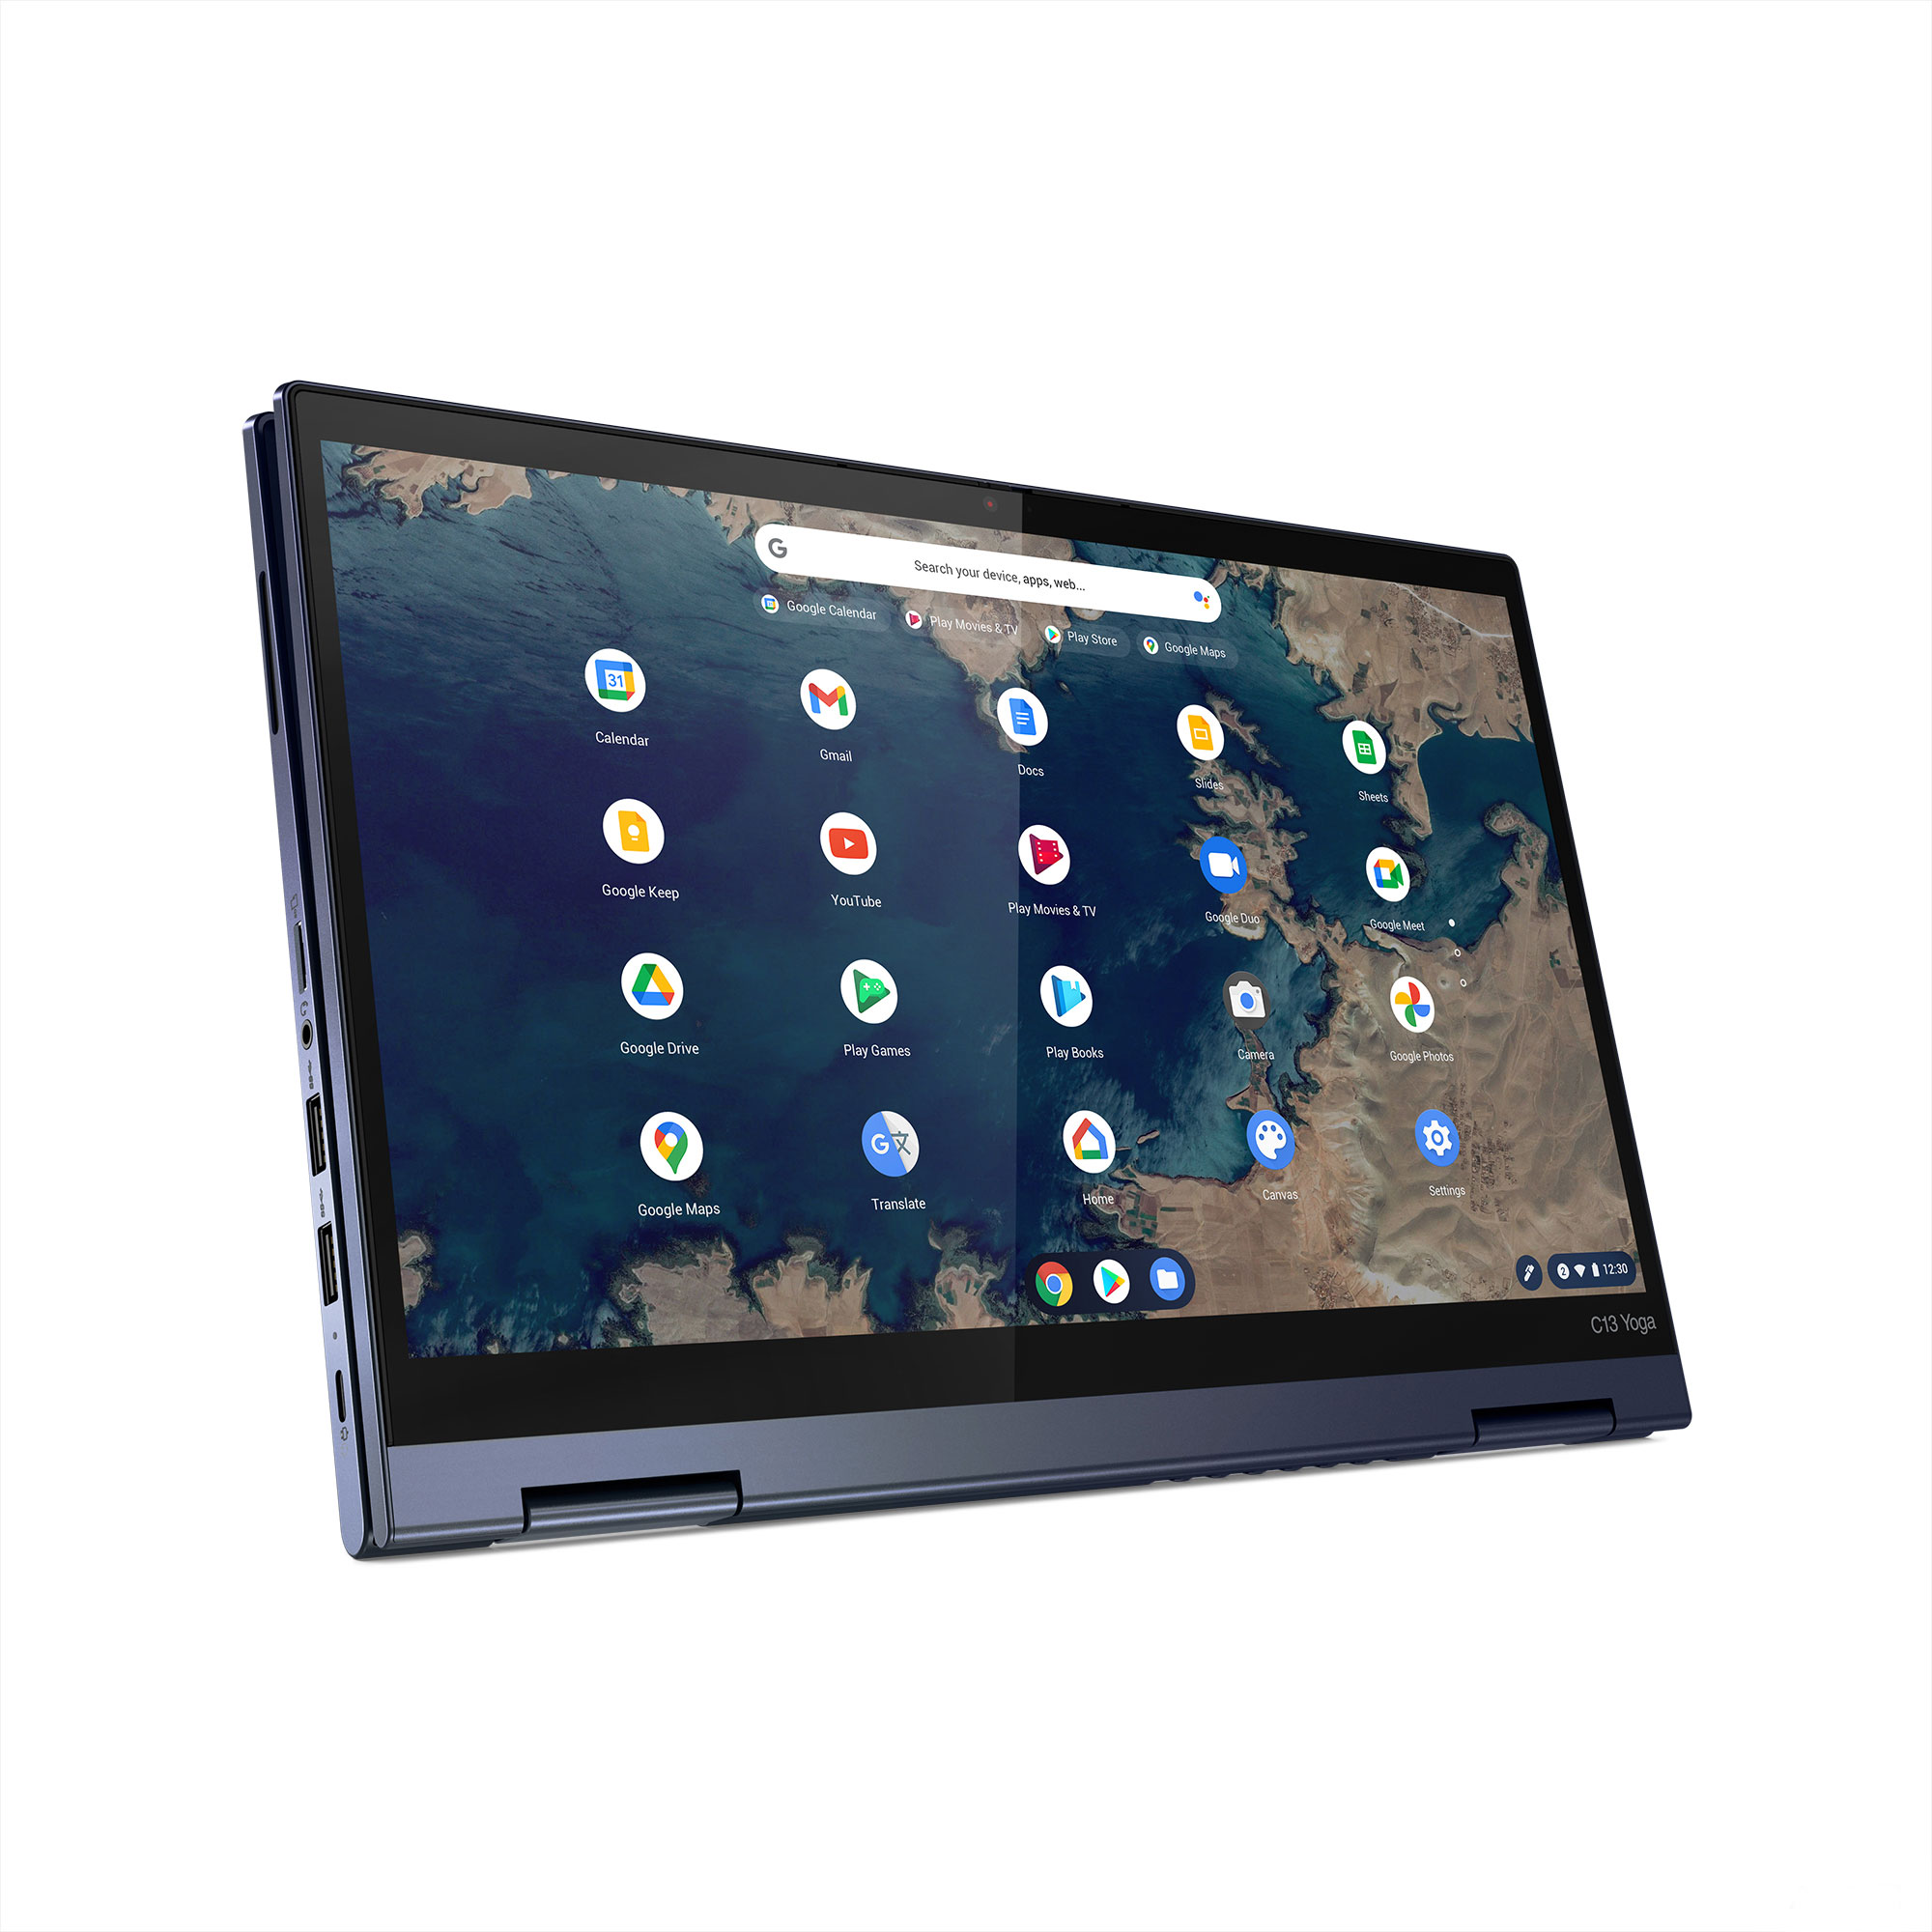 Lenovo ThinkPad C13 Yoga Chromebook 13.3" FHD 2-in-1s Touchscreen Laptop, AMD Athlon Gold 3150C, 4GB RAM, 32GB HD, Chrome OS, Blue, 20UX001PUS - image 3 of 7